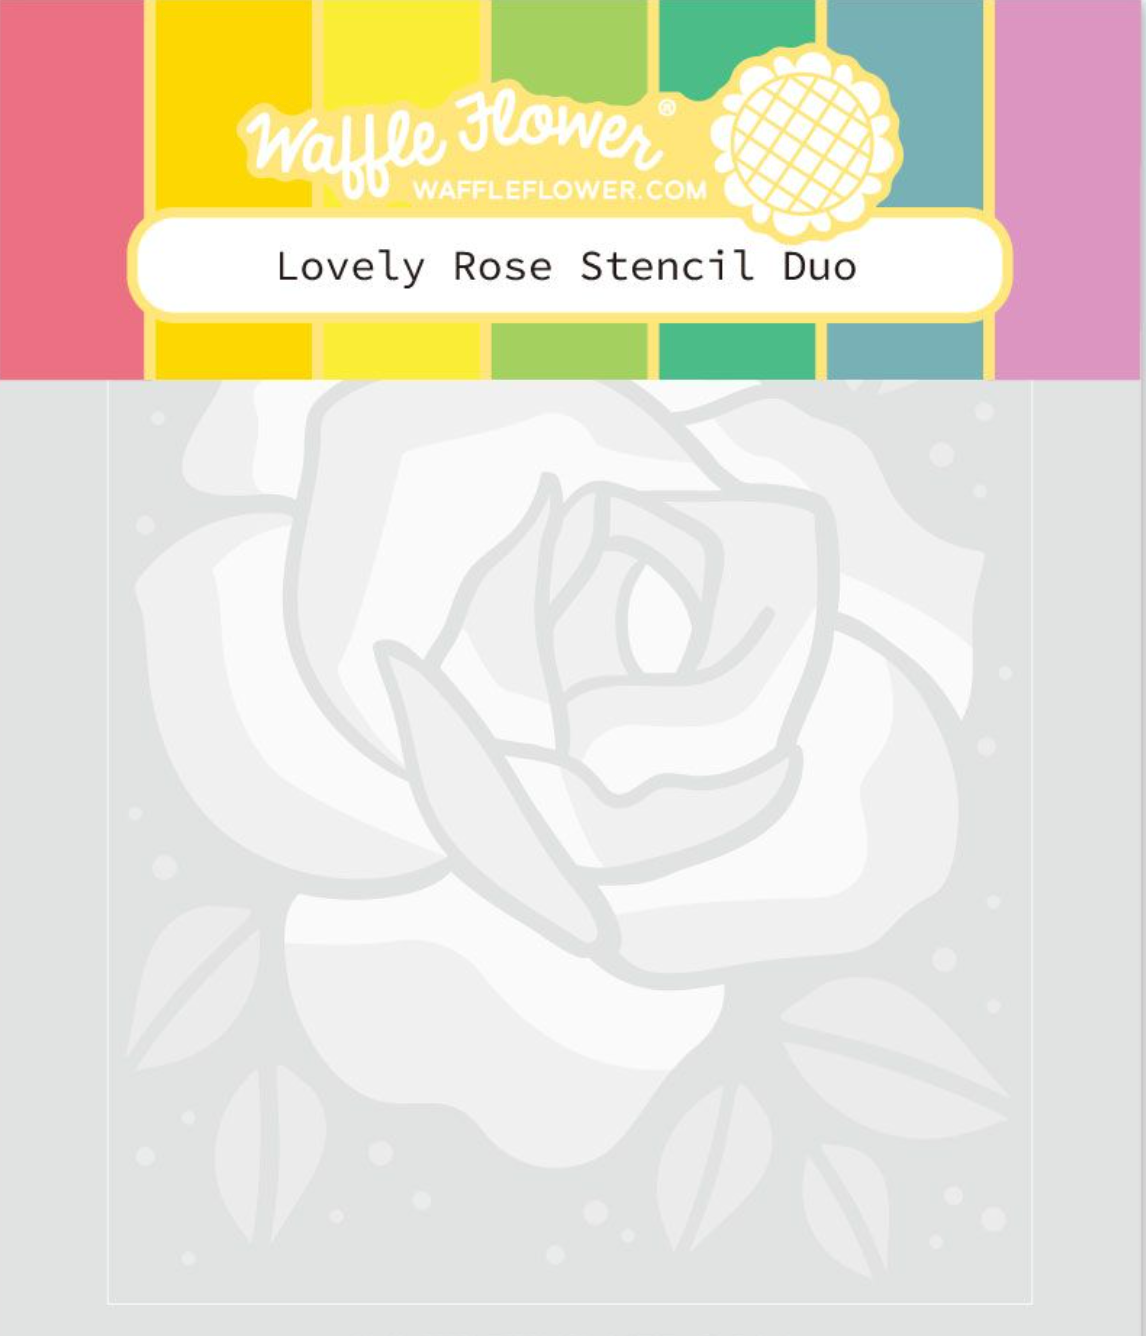 Waffle Flower Lovely Rose Stencils Duo 421607